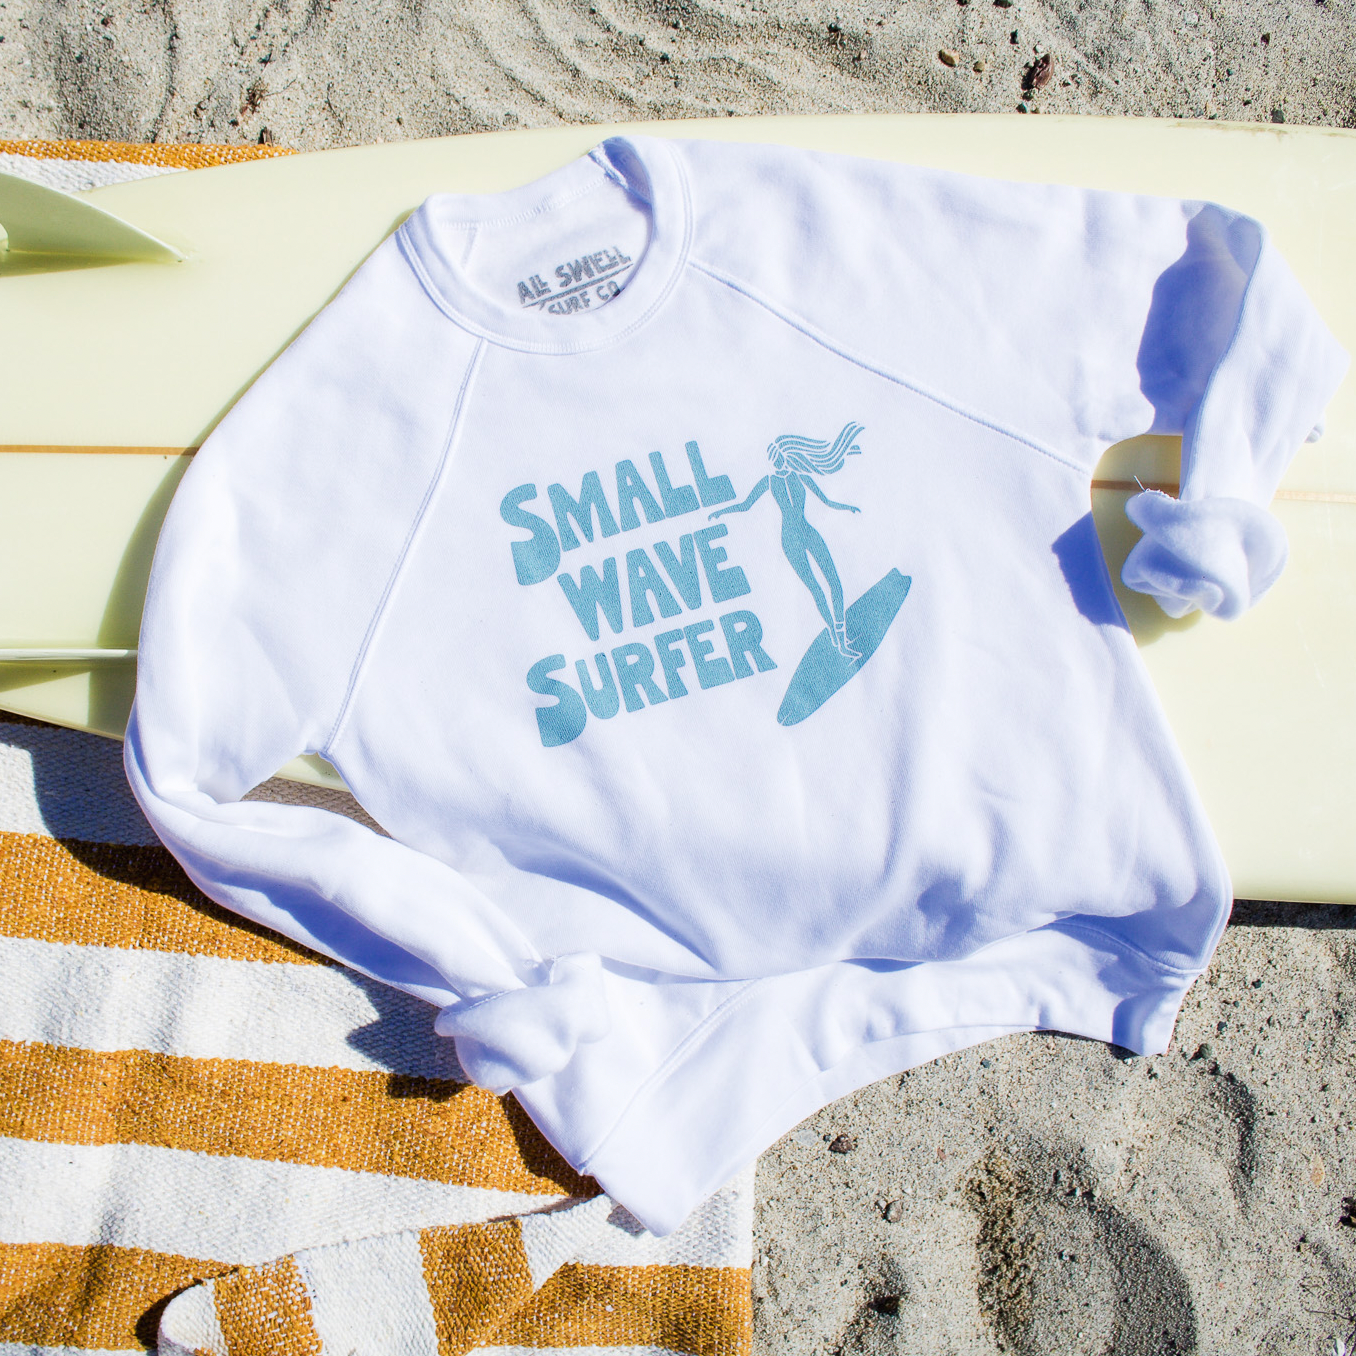 Small Wave Surfer Sweatshirt